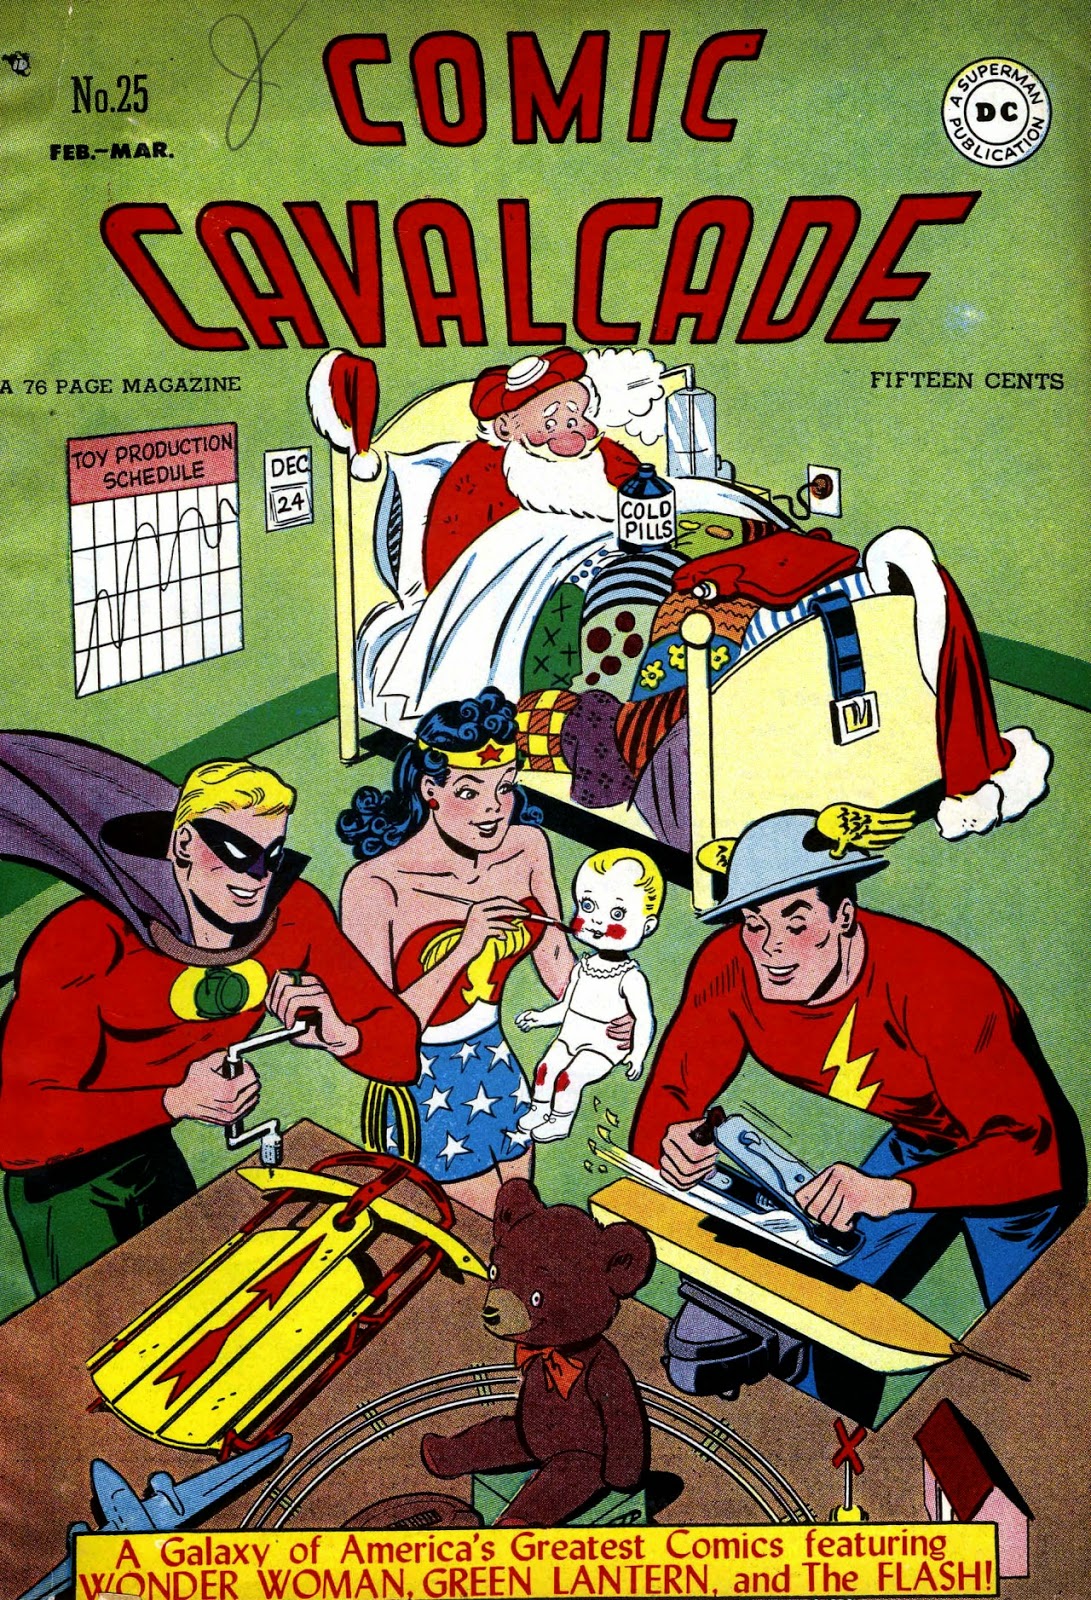 Comic Calvalcade #25